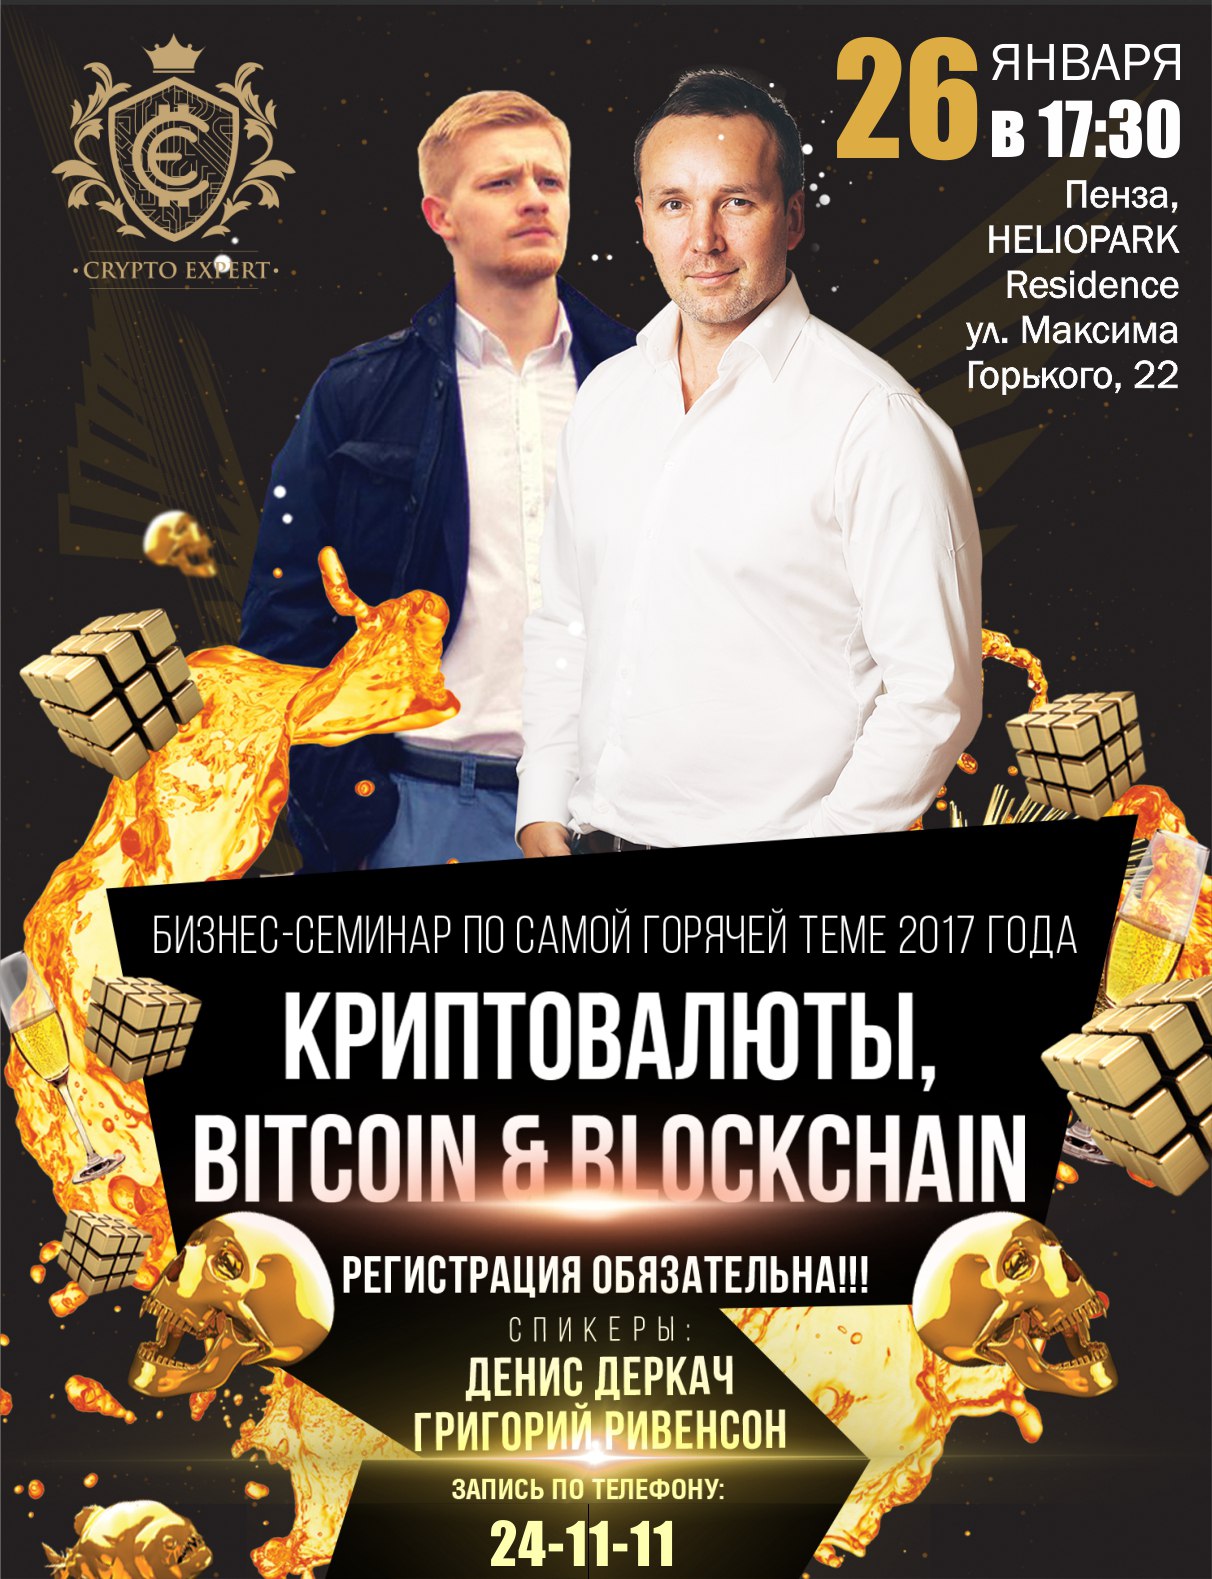 Бизнес-семинар  "Криптовалюта" 